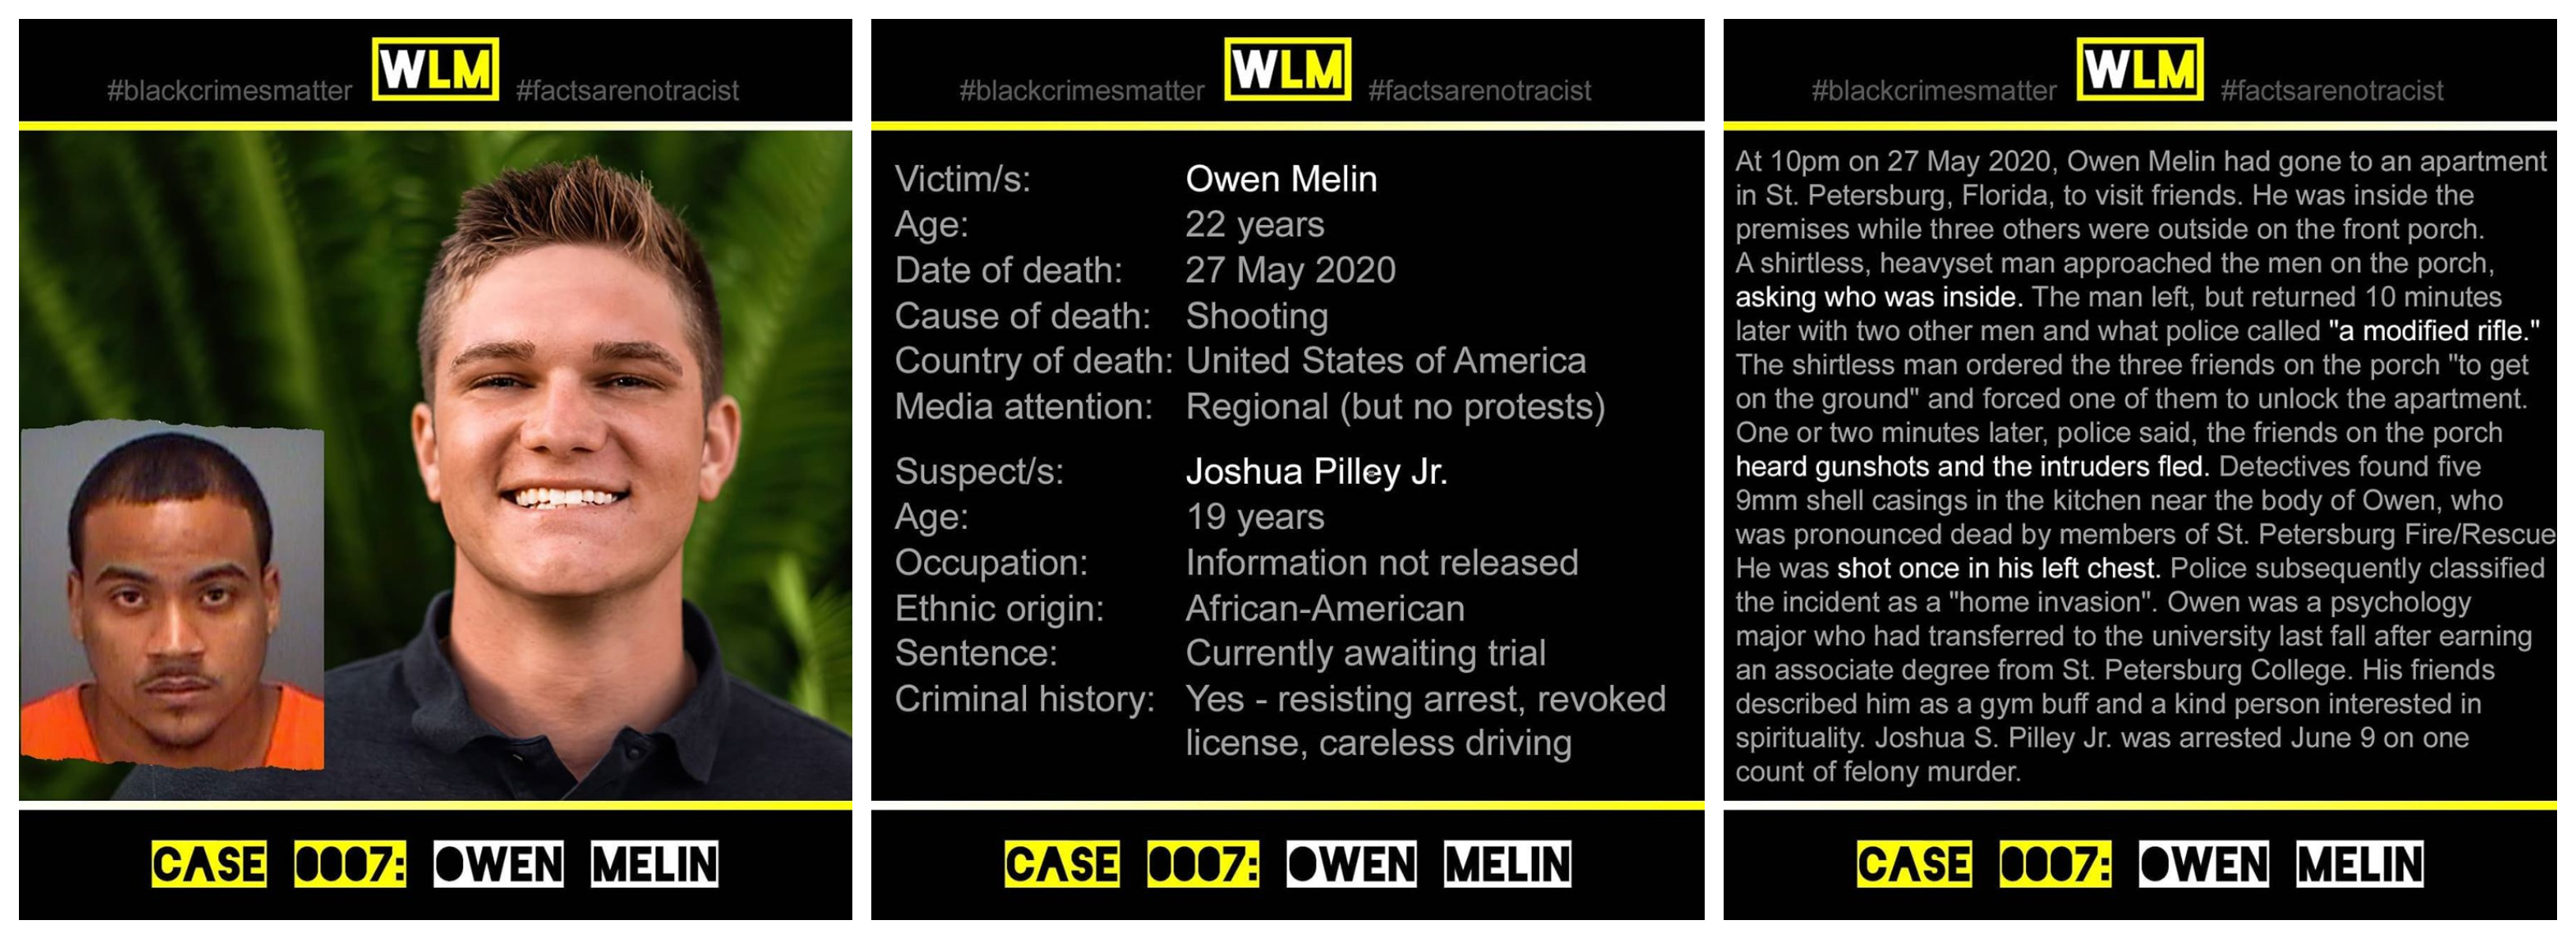 case-007-owen-melin